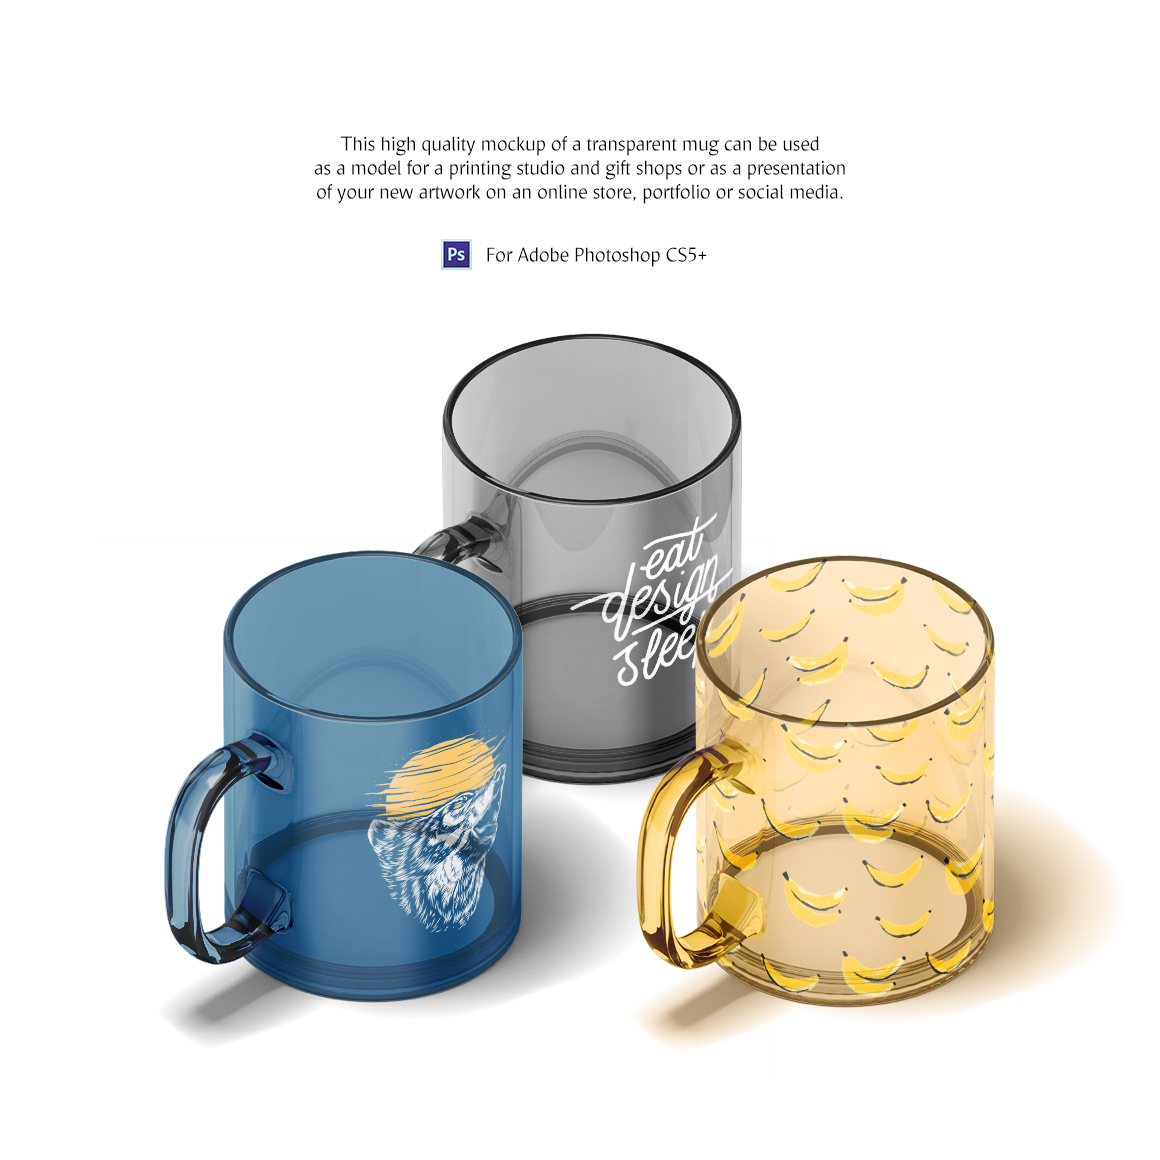 Download Freebie! New Glass Mug Animated Mockup by Alexandr Bognat on Dribbble